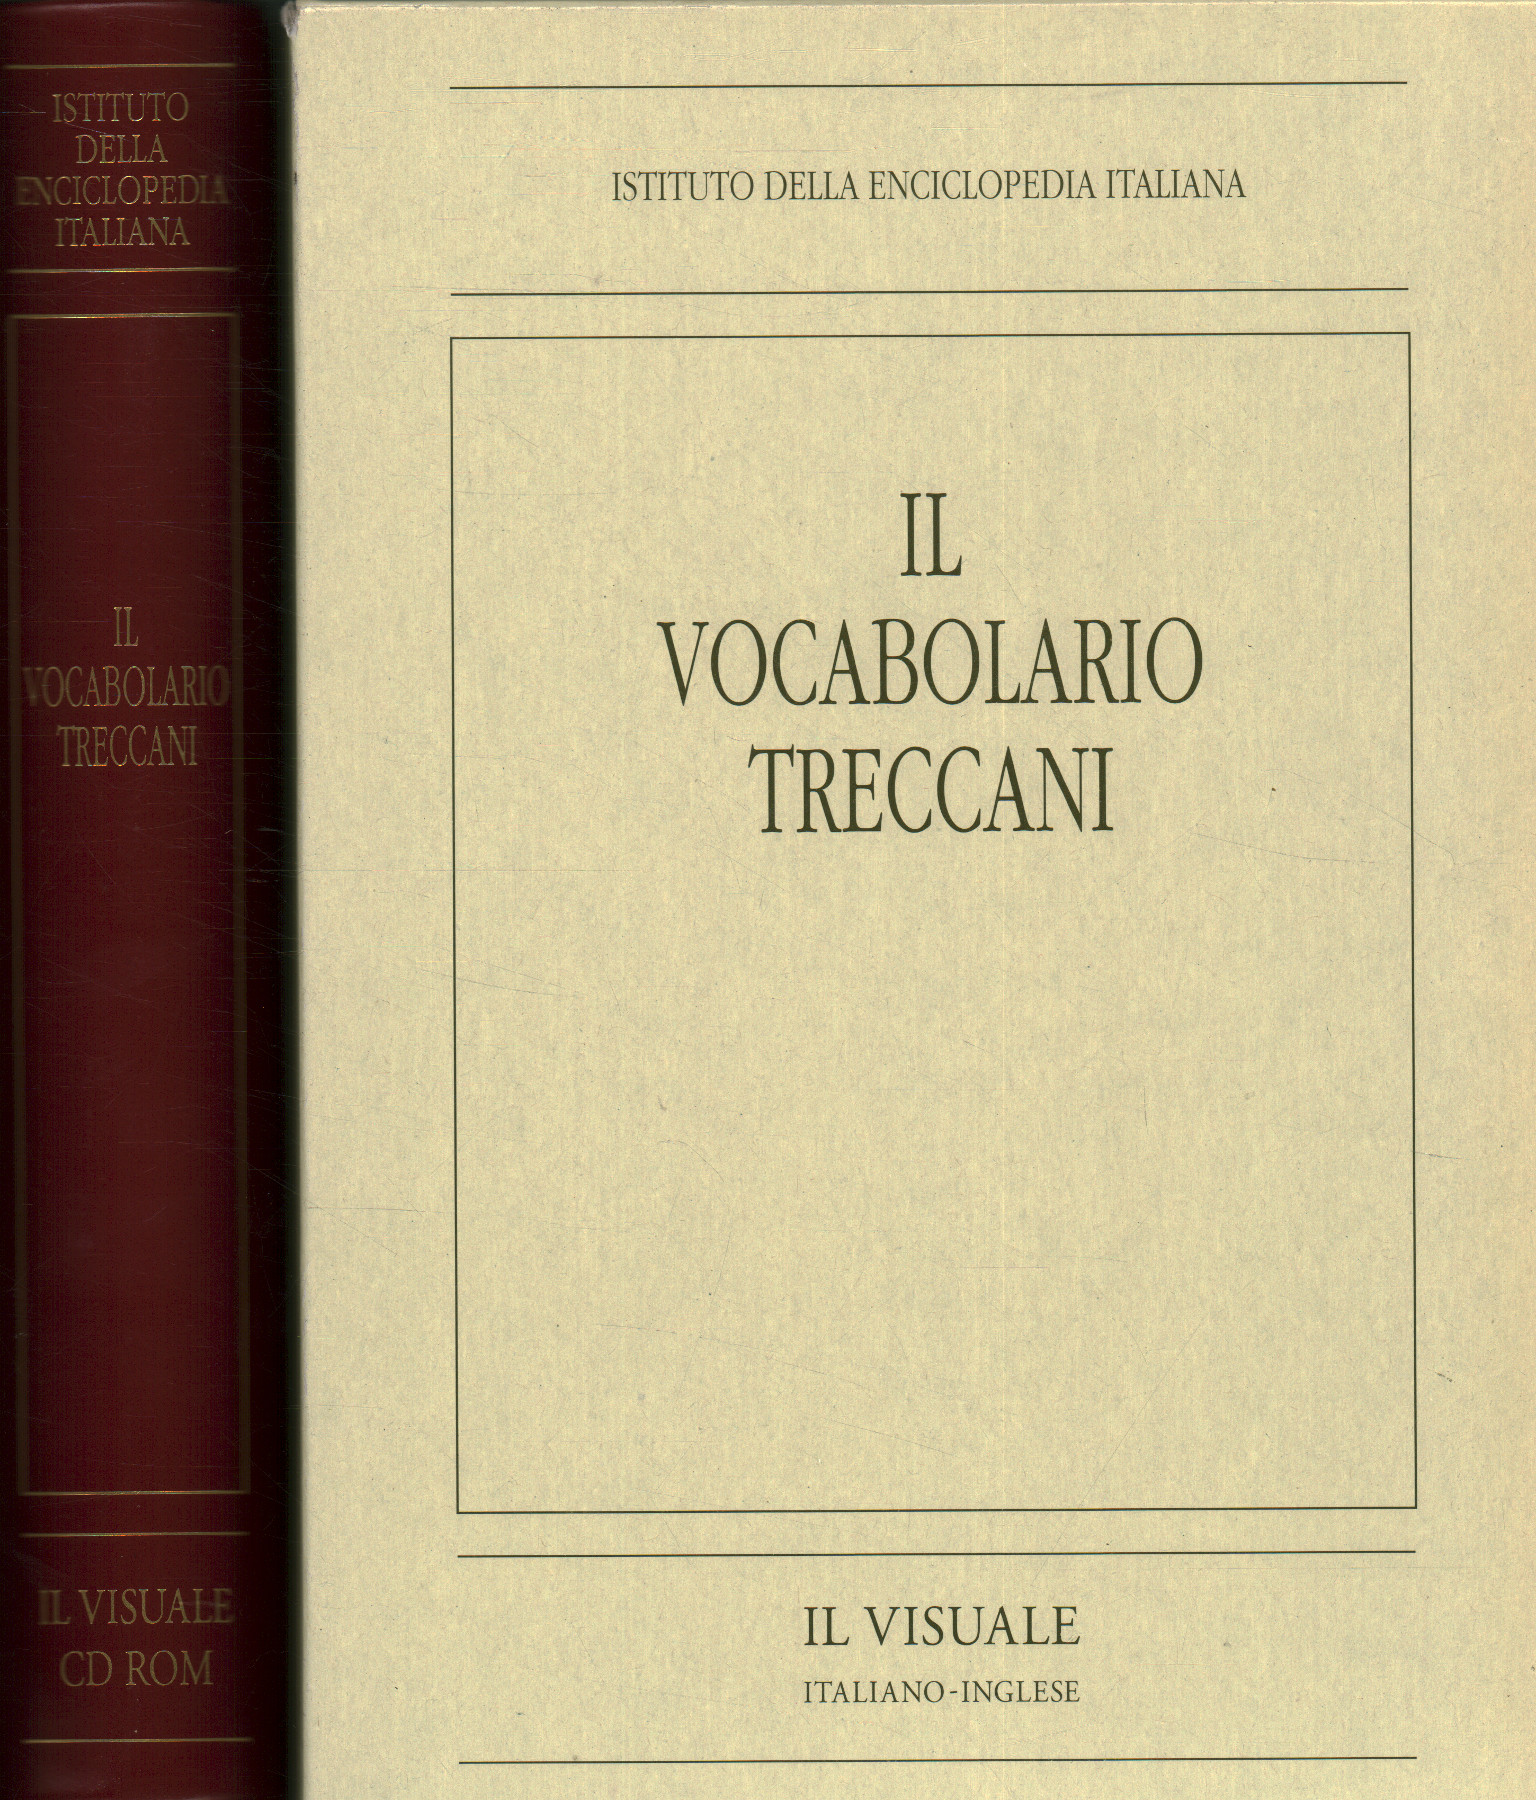 Das Treccani-Vokabular. Die visuelle mit%